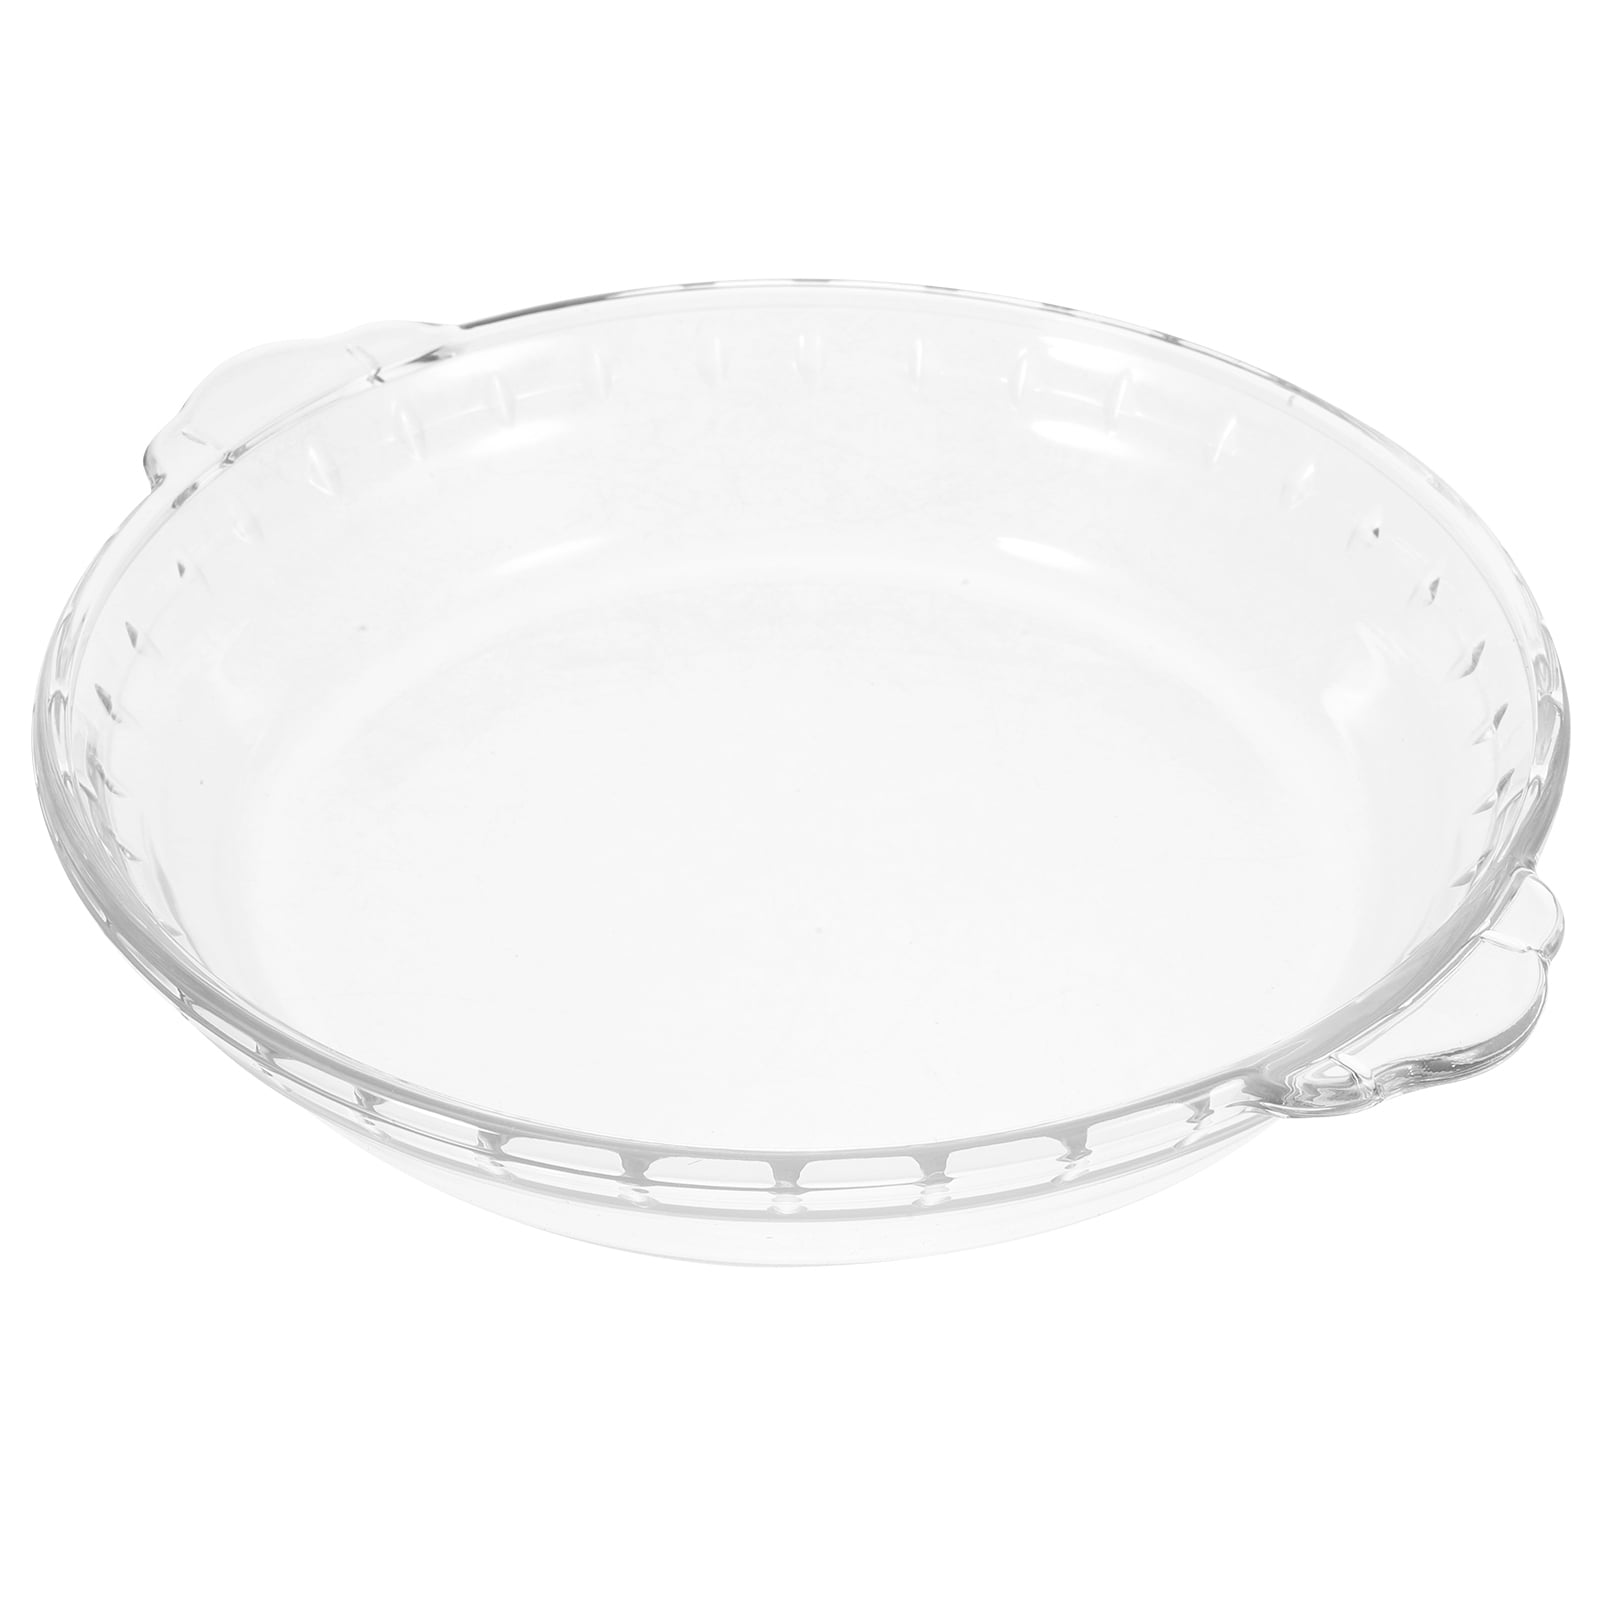 Hemoton 8 Inch Glass Pie Plate Pie Baking Dishes Transparent Microwave ...